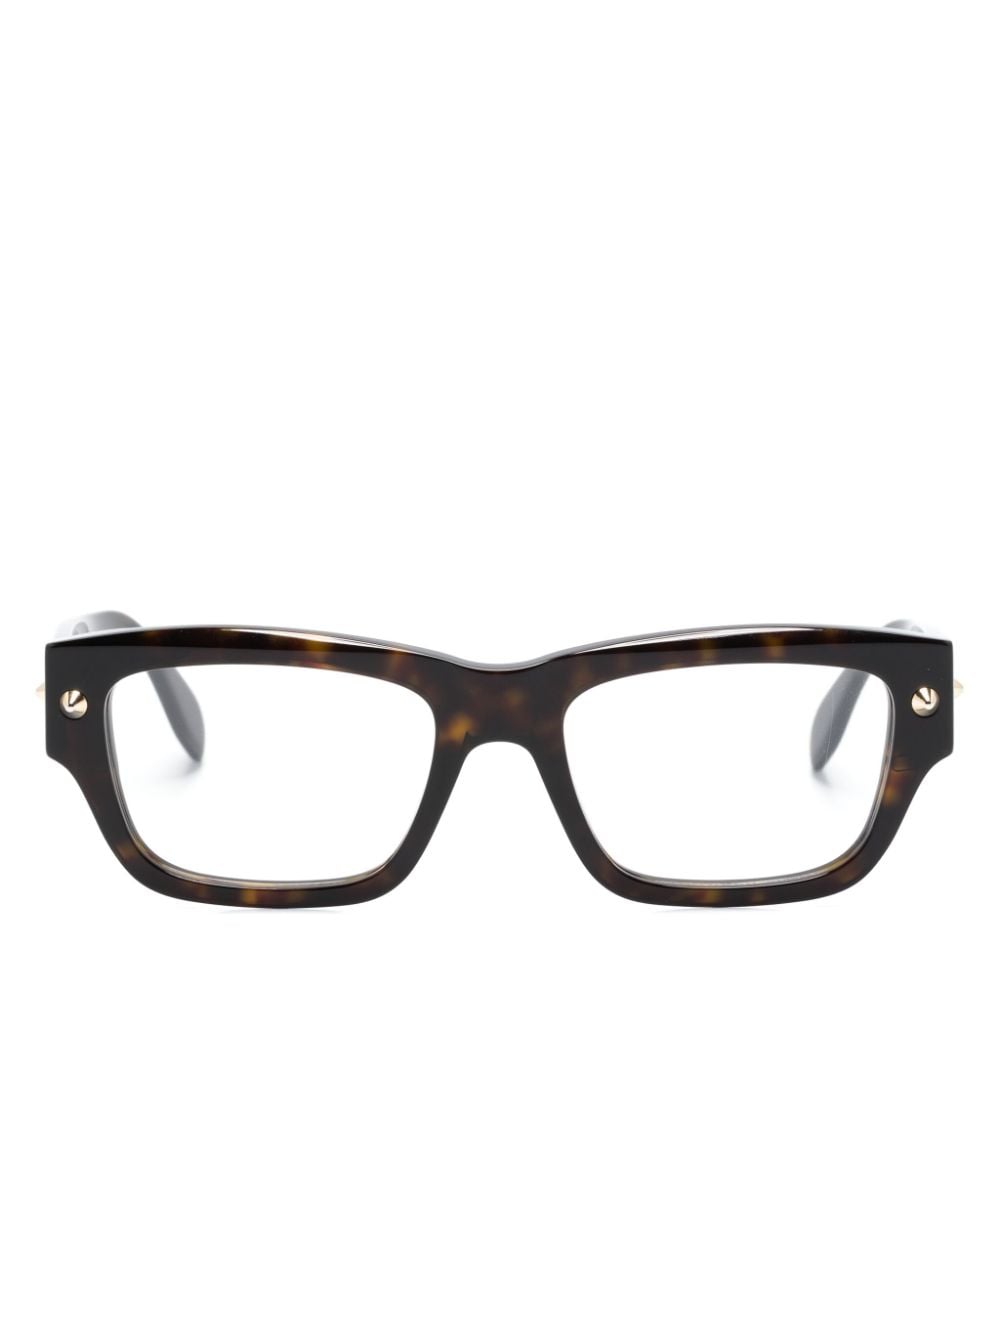 alexander mcqueen eyewear lunettes de vue à monture rectangulaire - marron